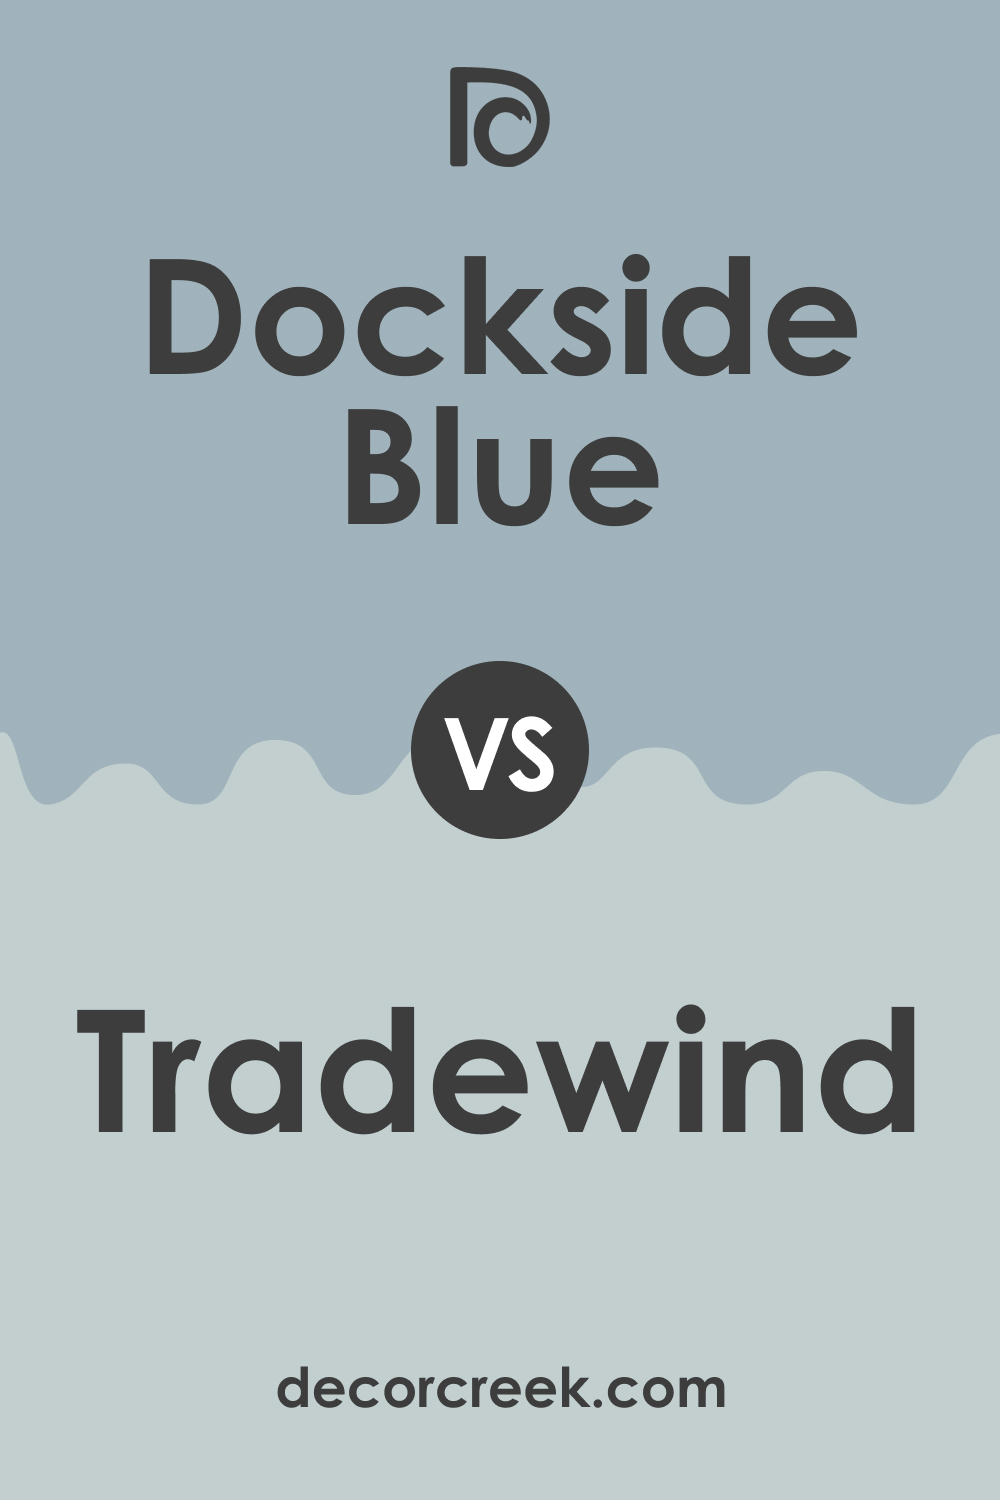 Dockside Blue vs Tradewind